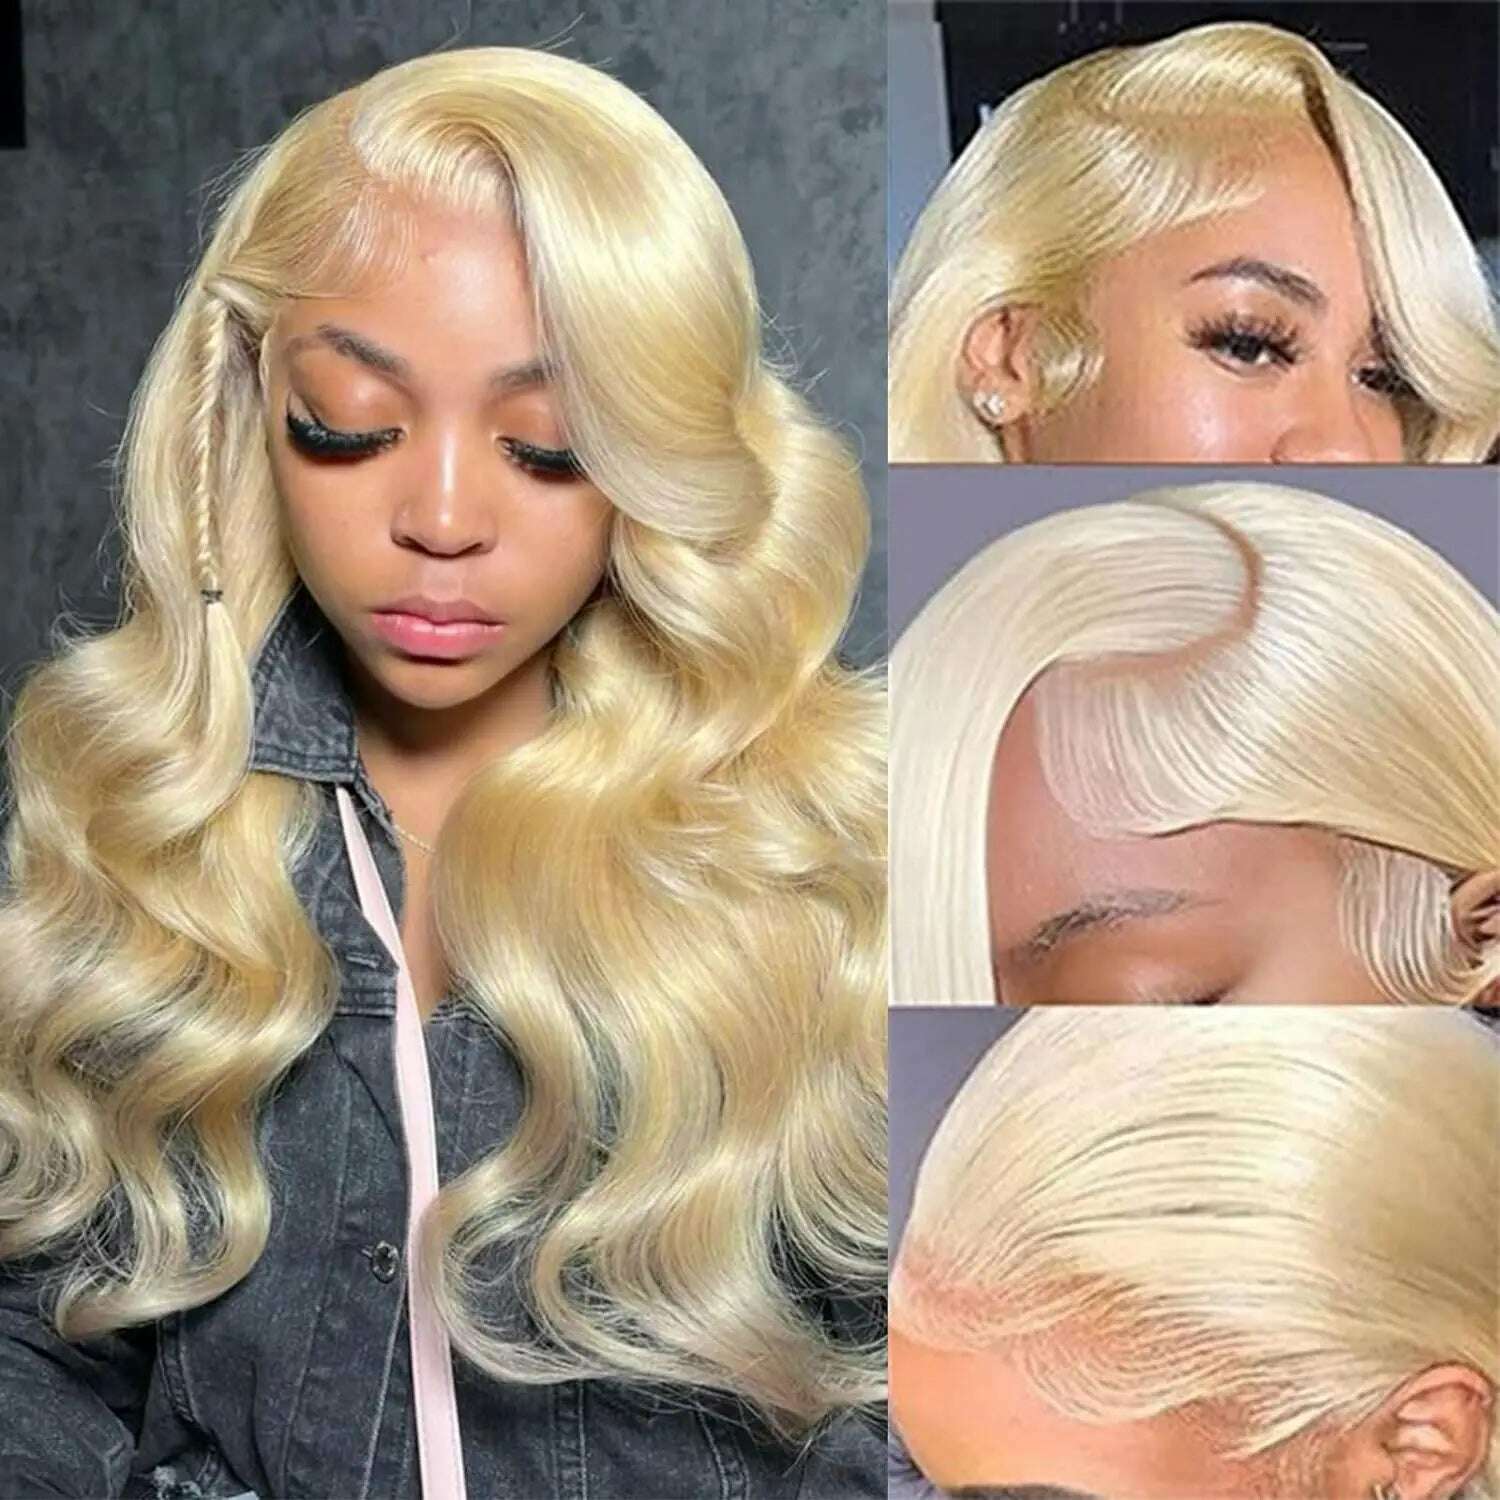 KIMLUD, 30 Inch 613 Honey Blonde Body Wave 13x6 HD Transparent Lace Frontal Wigs Brazilian Human Hair 180% Density Water Wave For Women, KIMLUD Women's Clothes